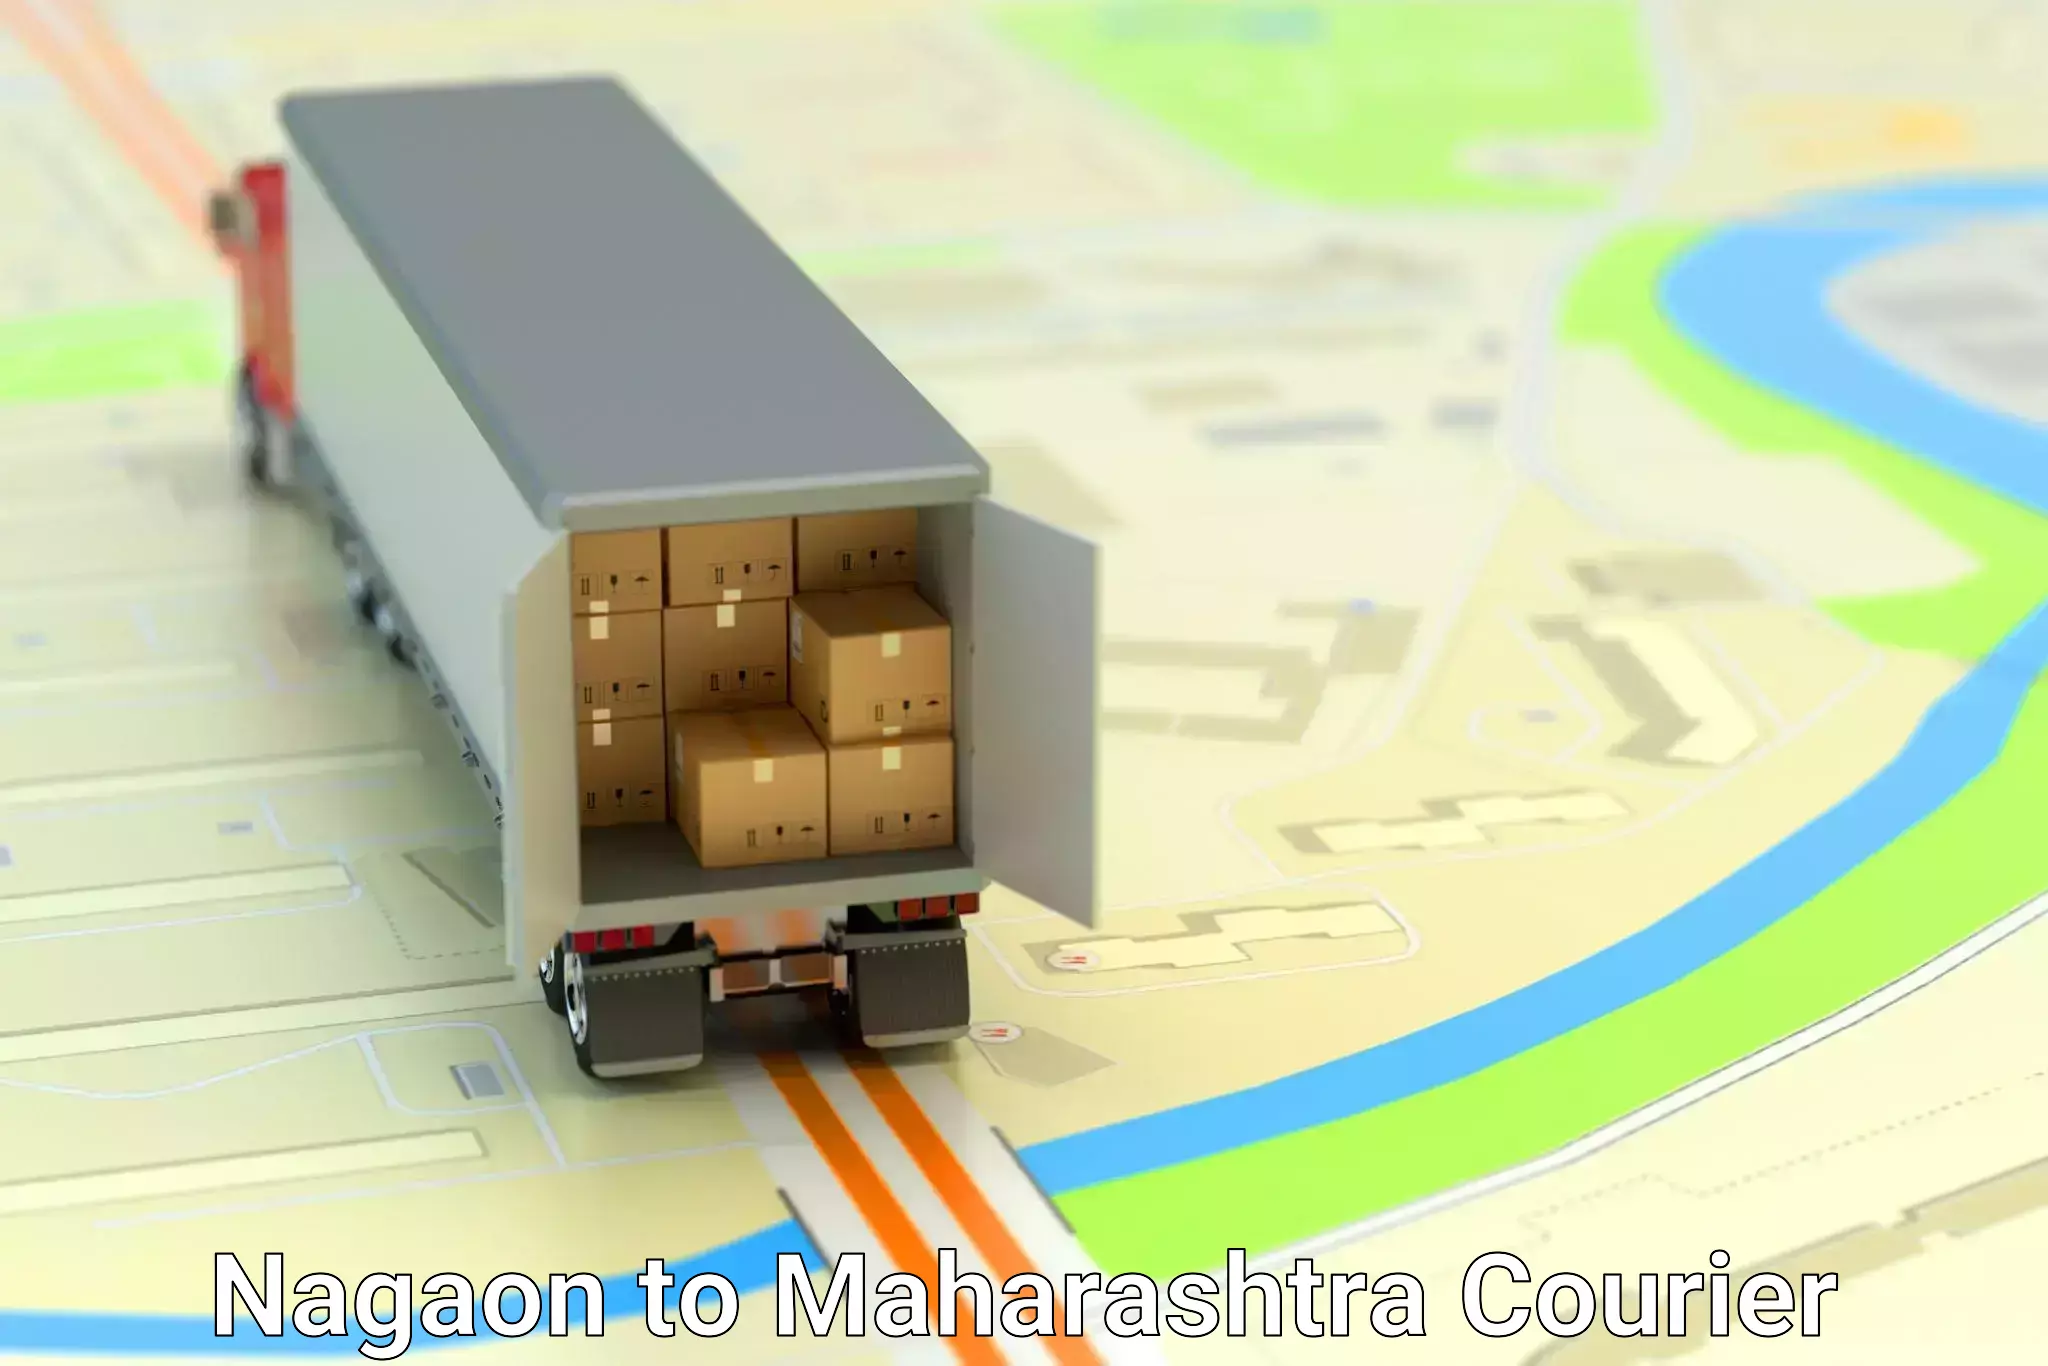 Express delivery capabilities in Nagaon to Maharashtra